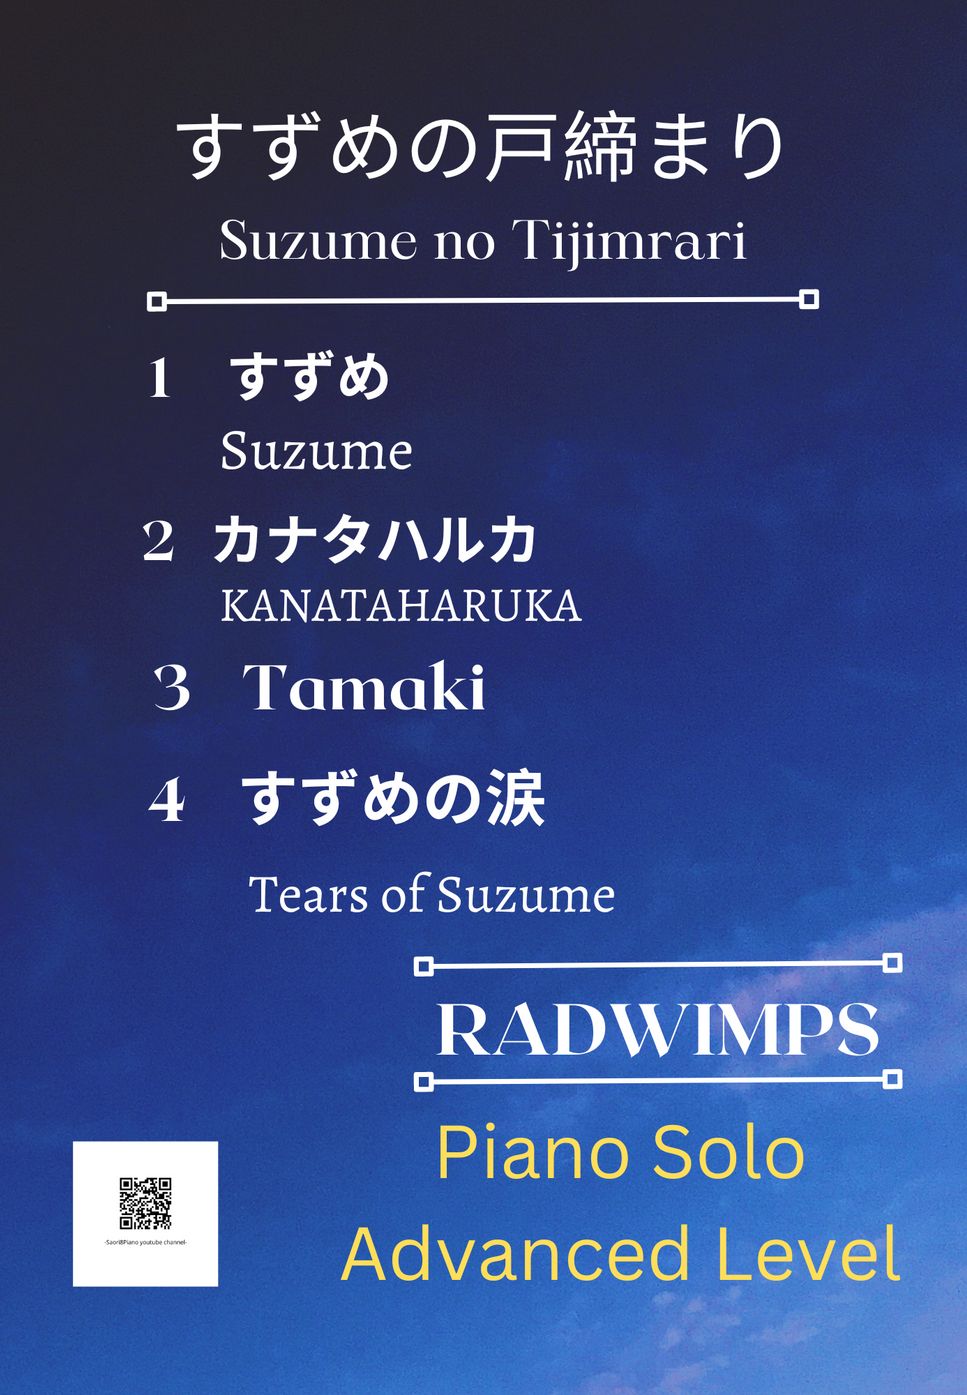 RADWIMPS - すずめの戸締まり全４曲集Suzume No Tojimari (Advanced Level) by Saori8Piano